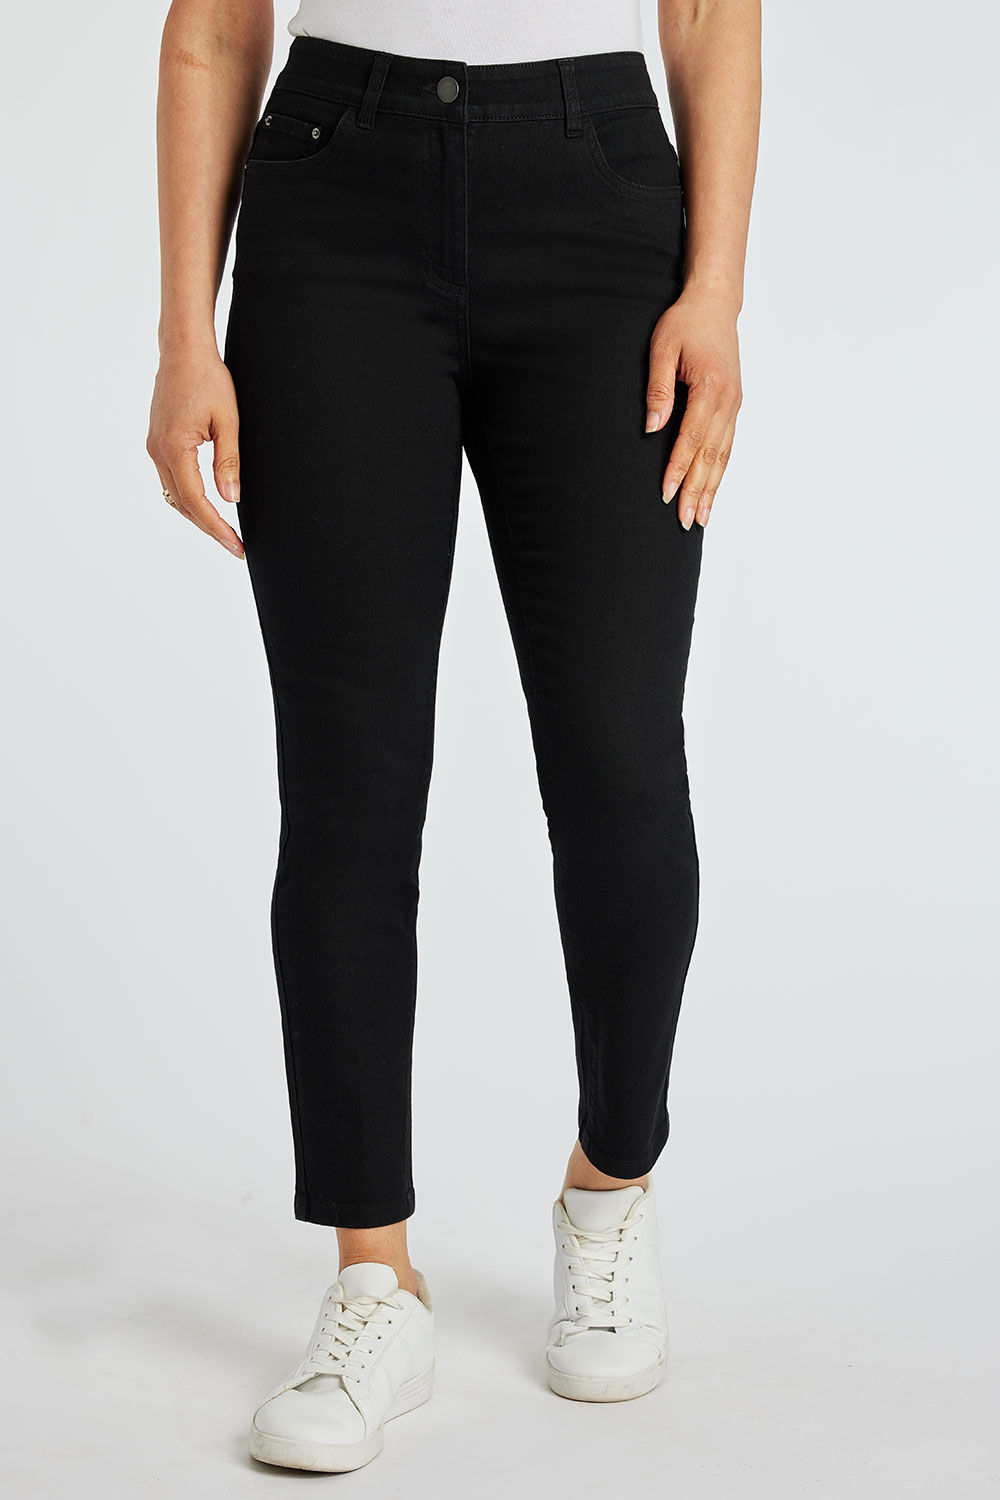 Bonmarche Women’s Black Cotton Casual The SUSIE Slim Leg Jeans, Size: 22